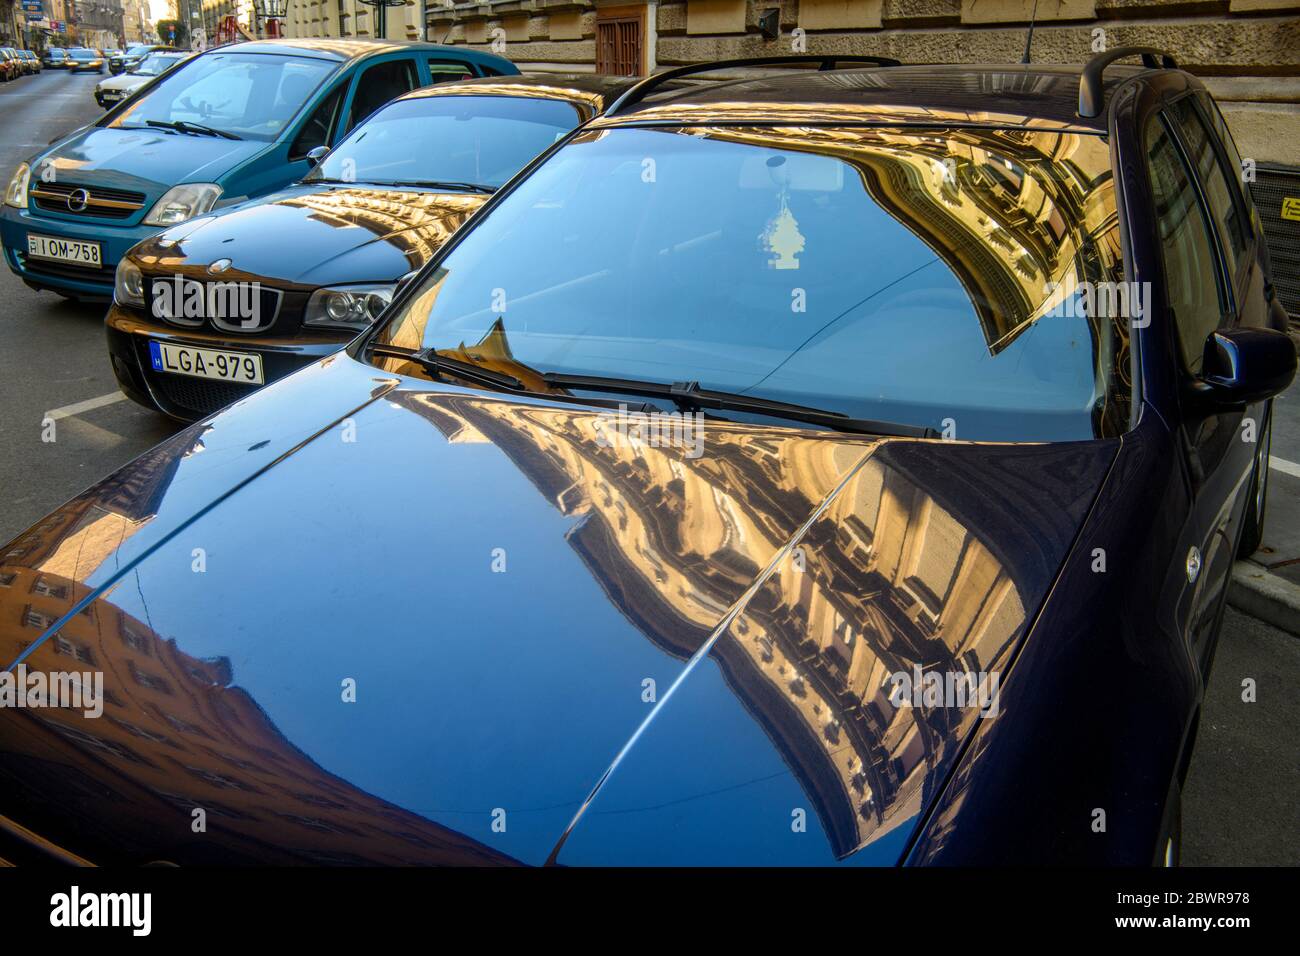 Centro de Budapest (Pest) - reflexiones en coches estacionados, Budapest, Hungría Central, Hungría. Foto de stock